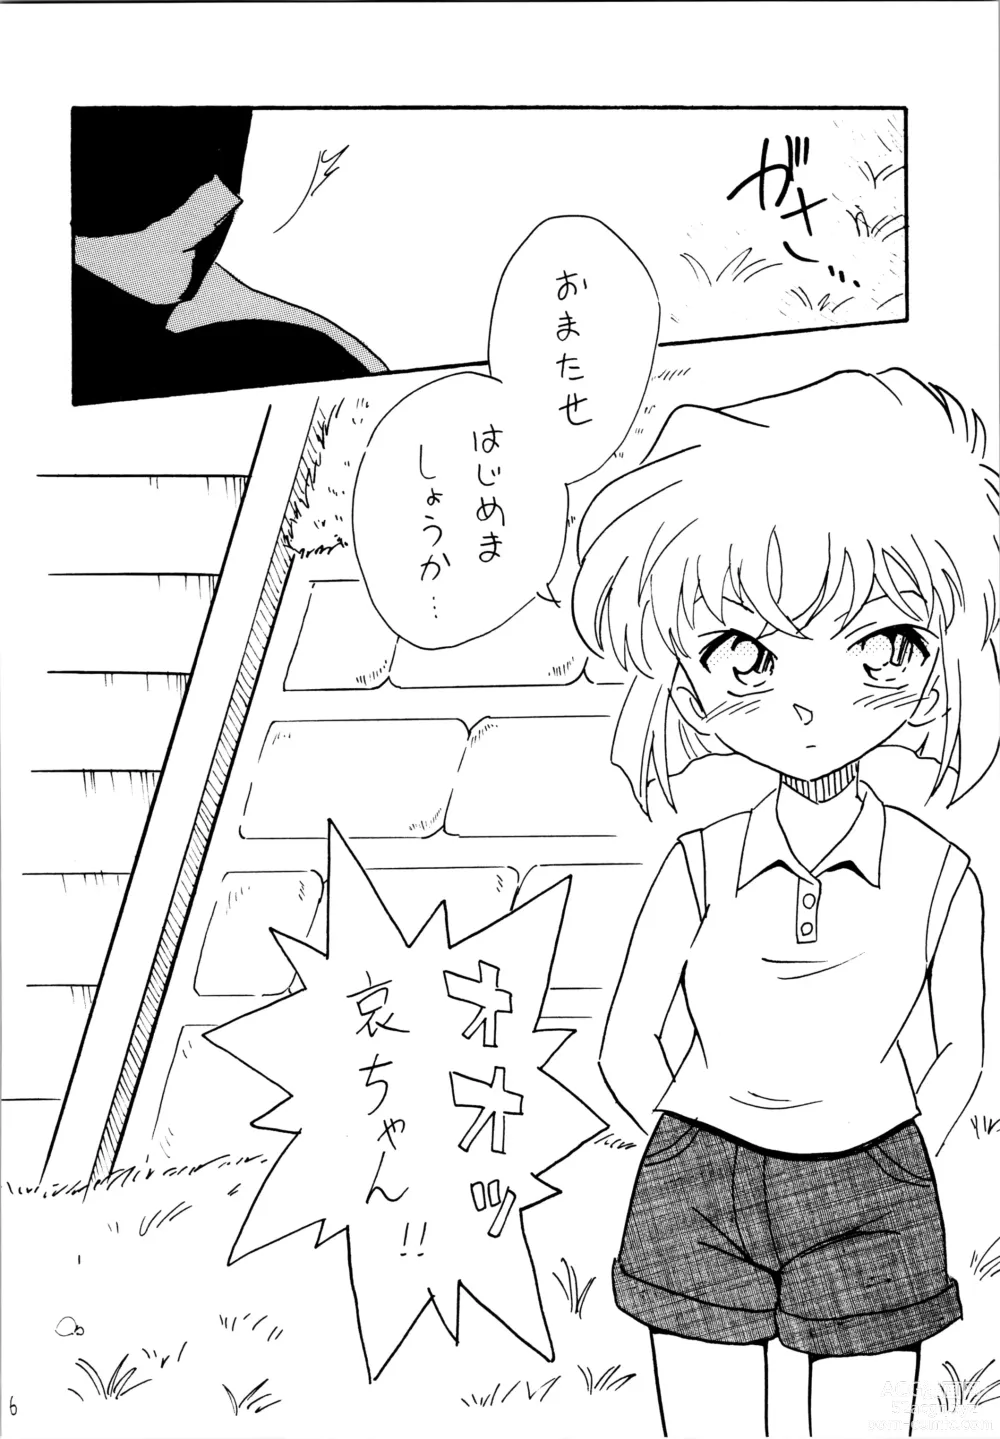 Page 5 of doujinshi Natsuyasumi